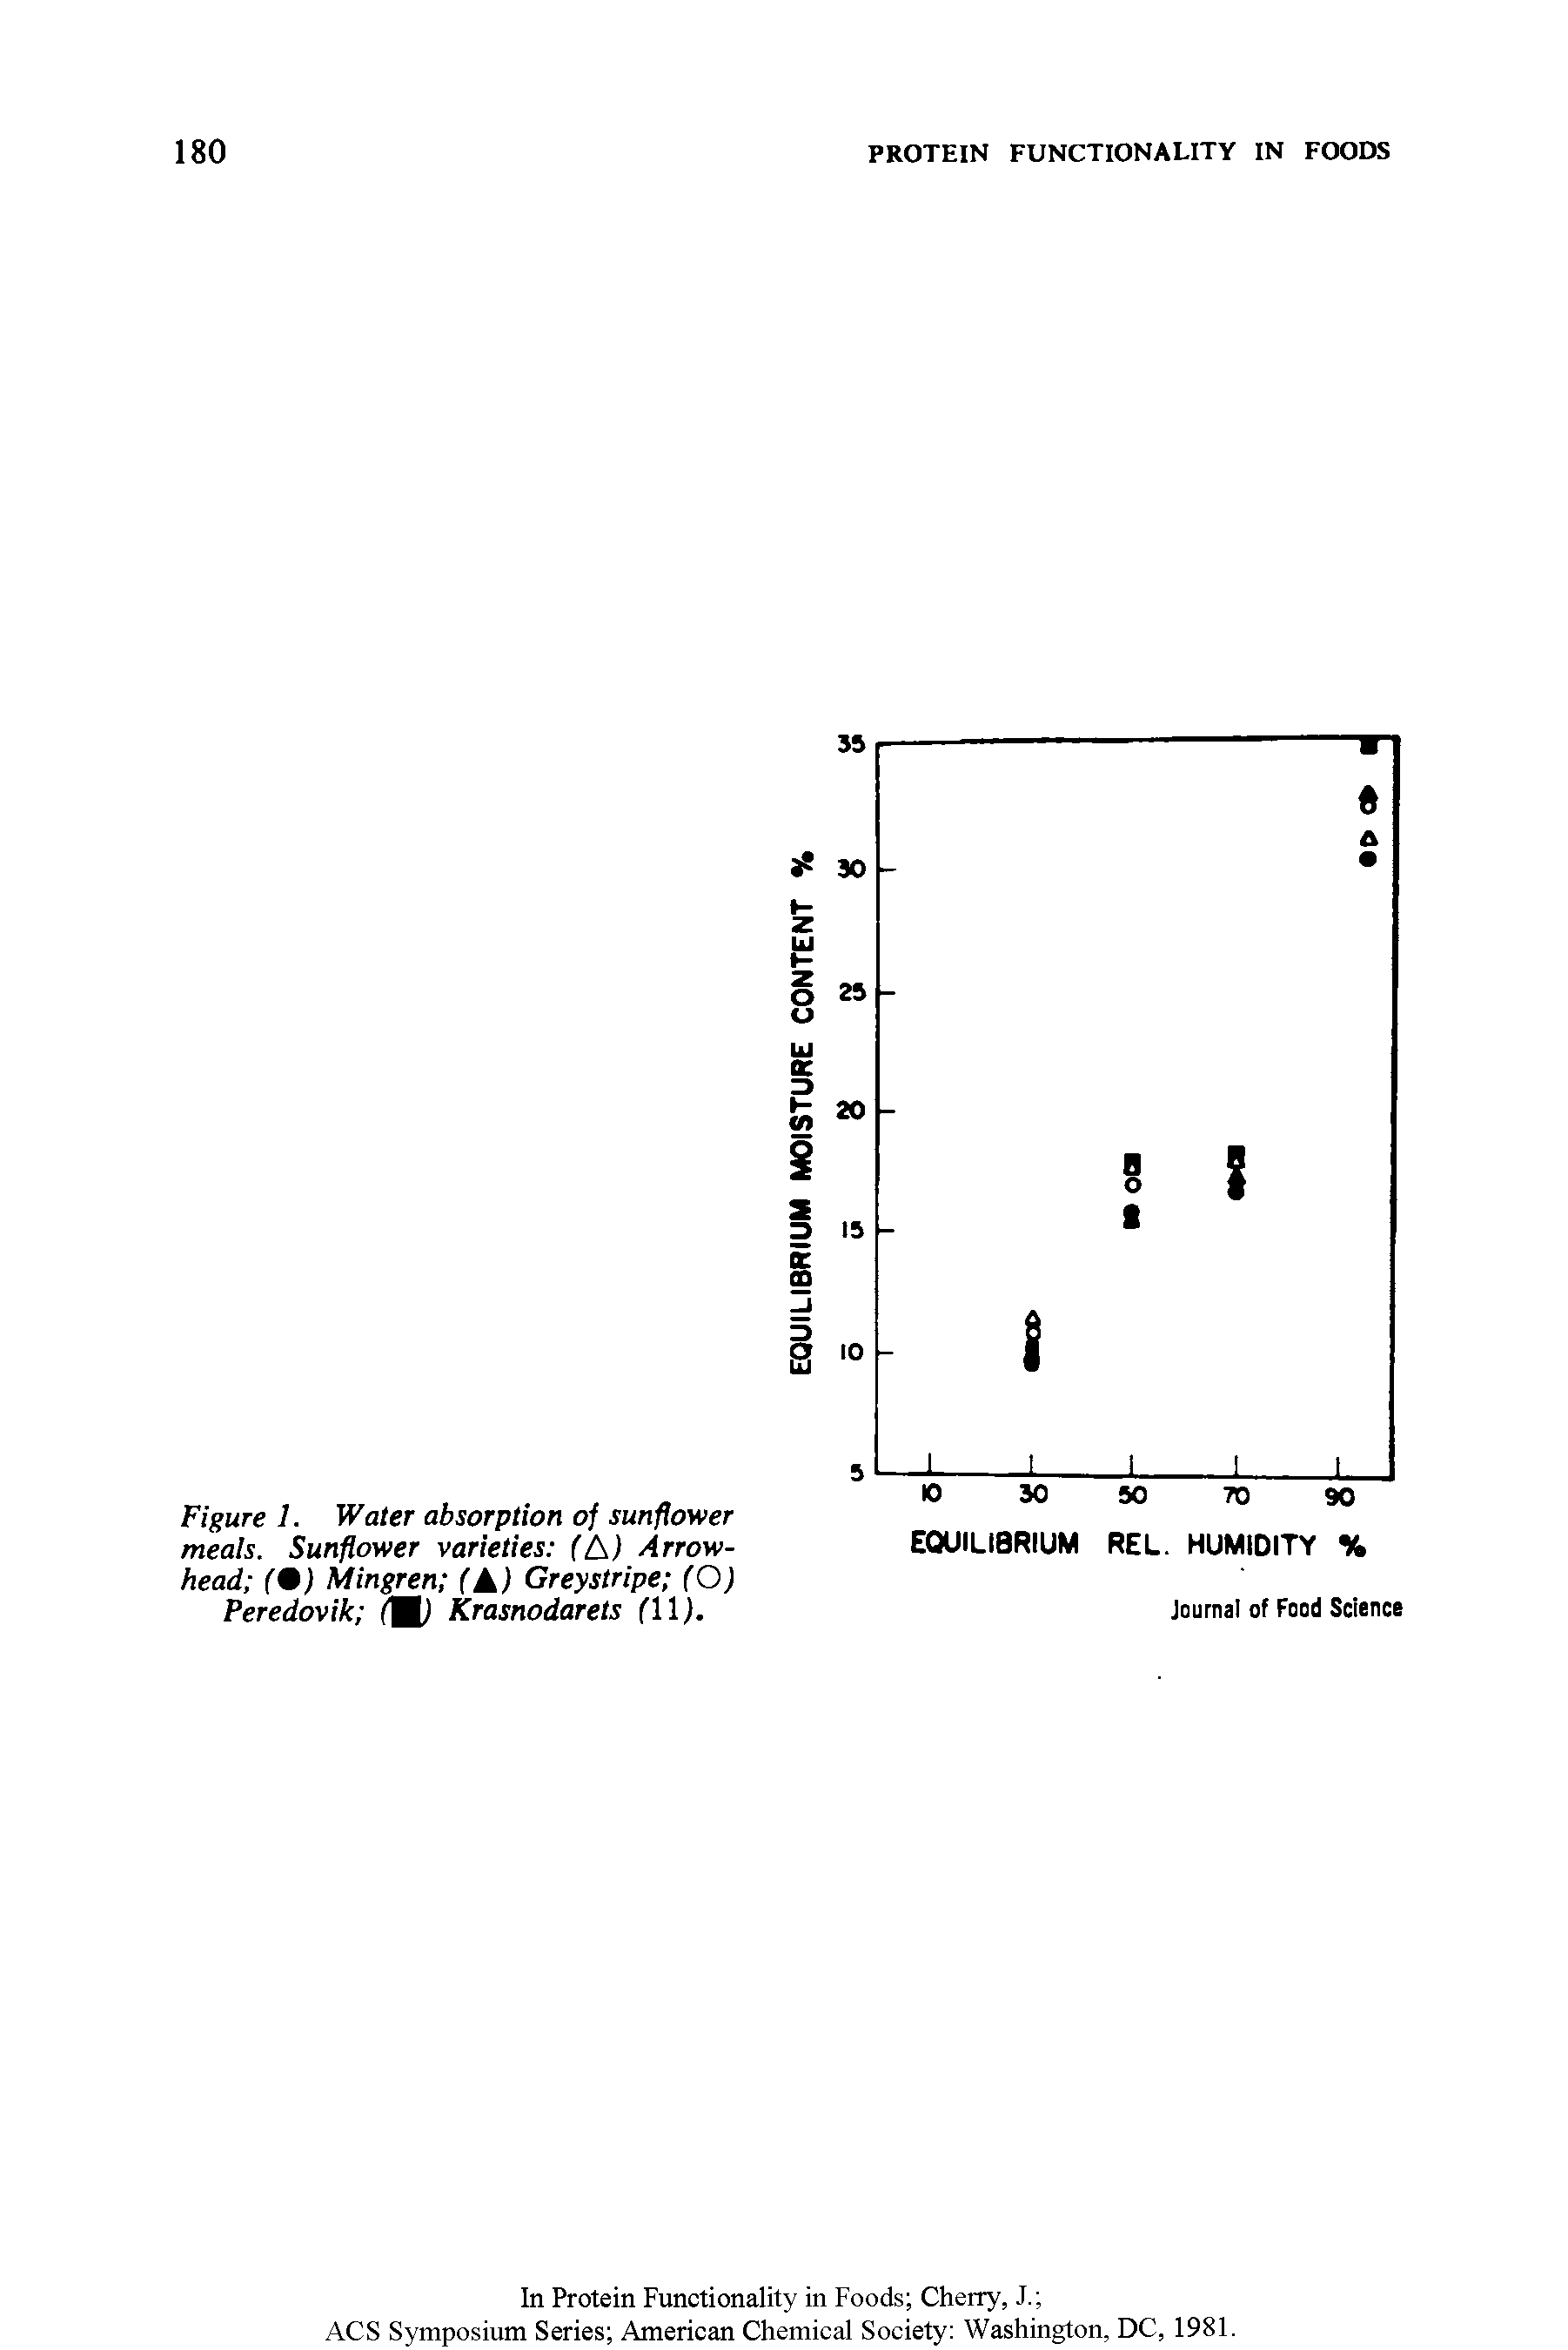 Figure 1. Water absorption of sunflower meals. Sunflower varieties fA) Arrowhead (9) Mingren ( ) Greystripe fO) Peredovik (U) Krasnodarets ( ll).